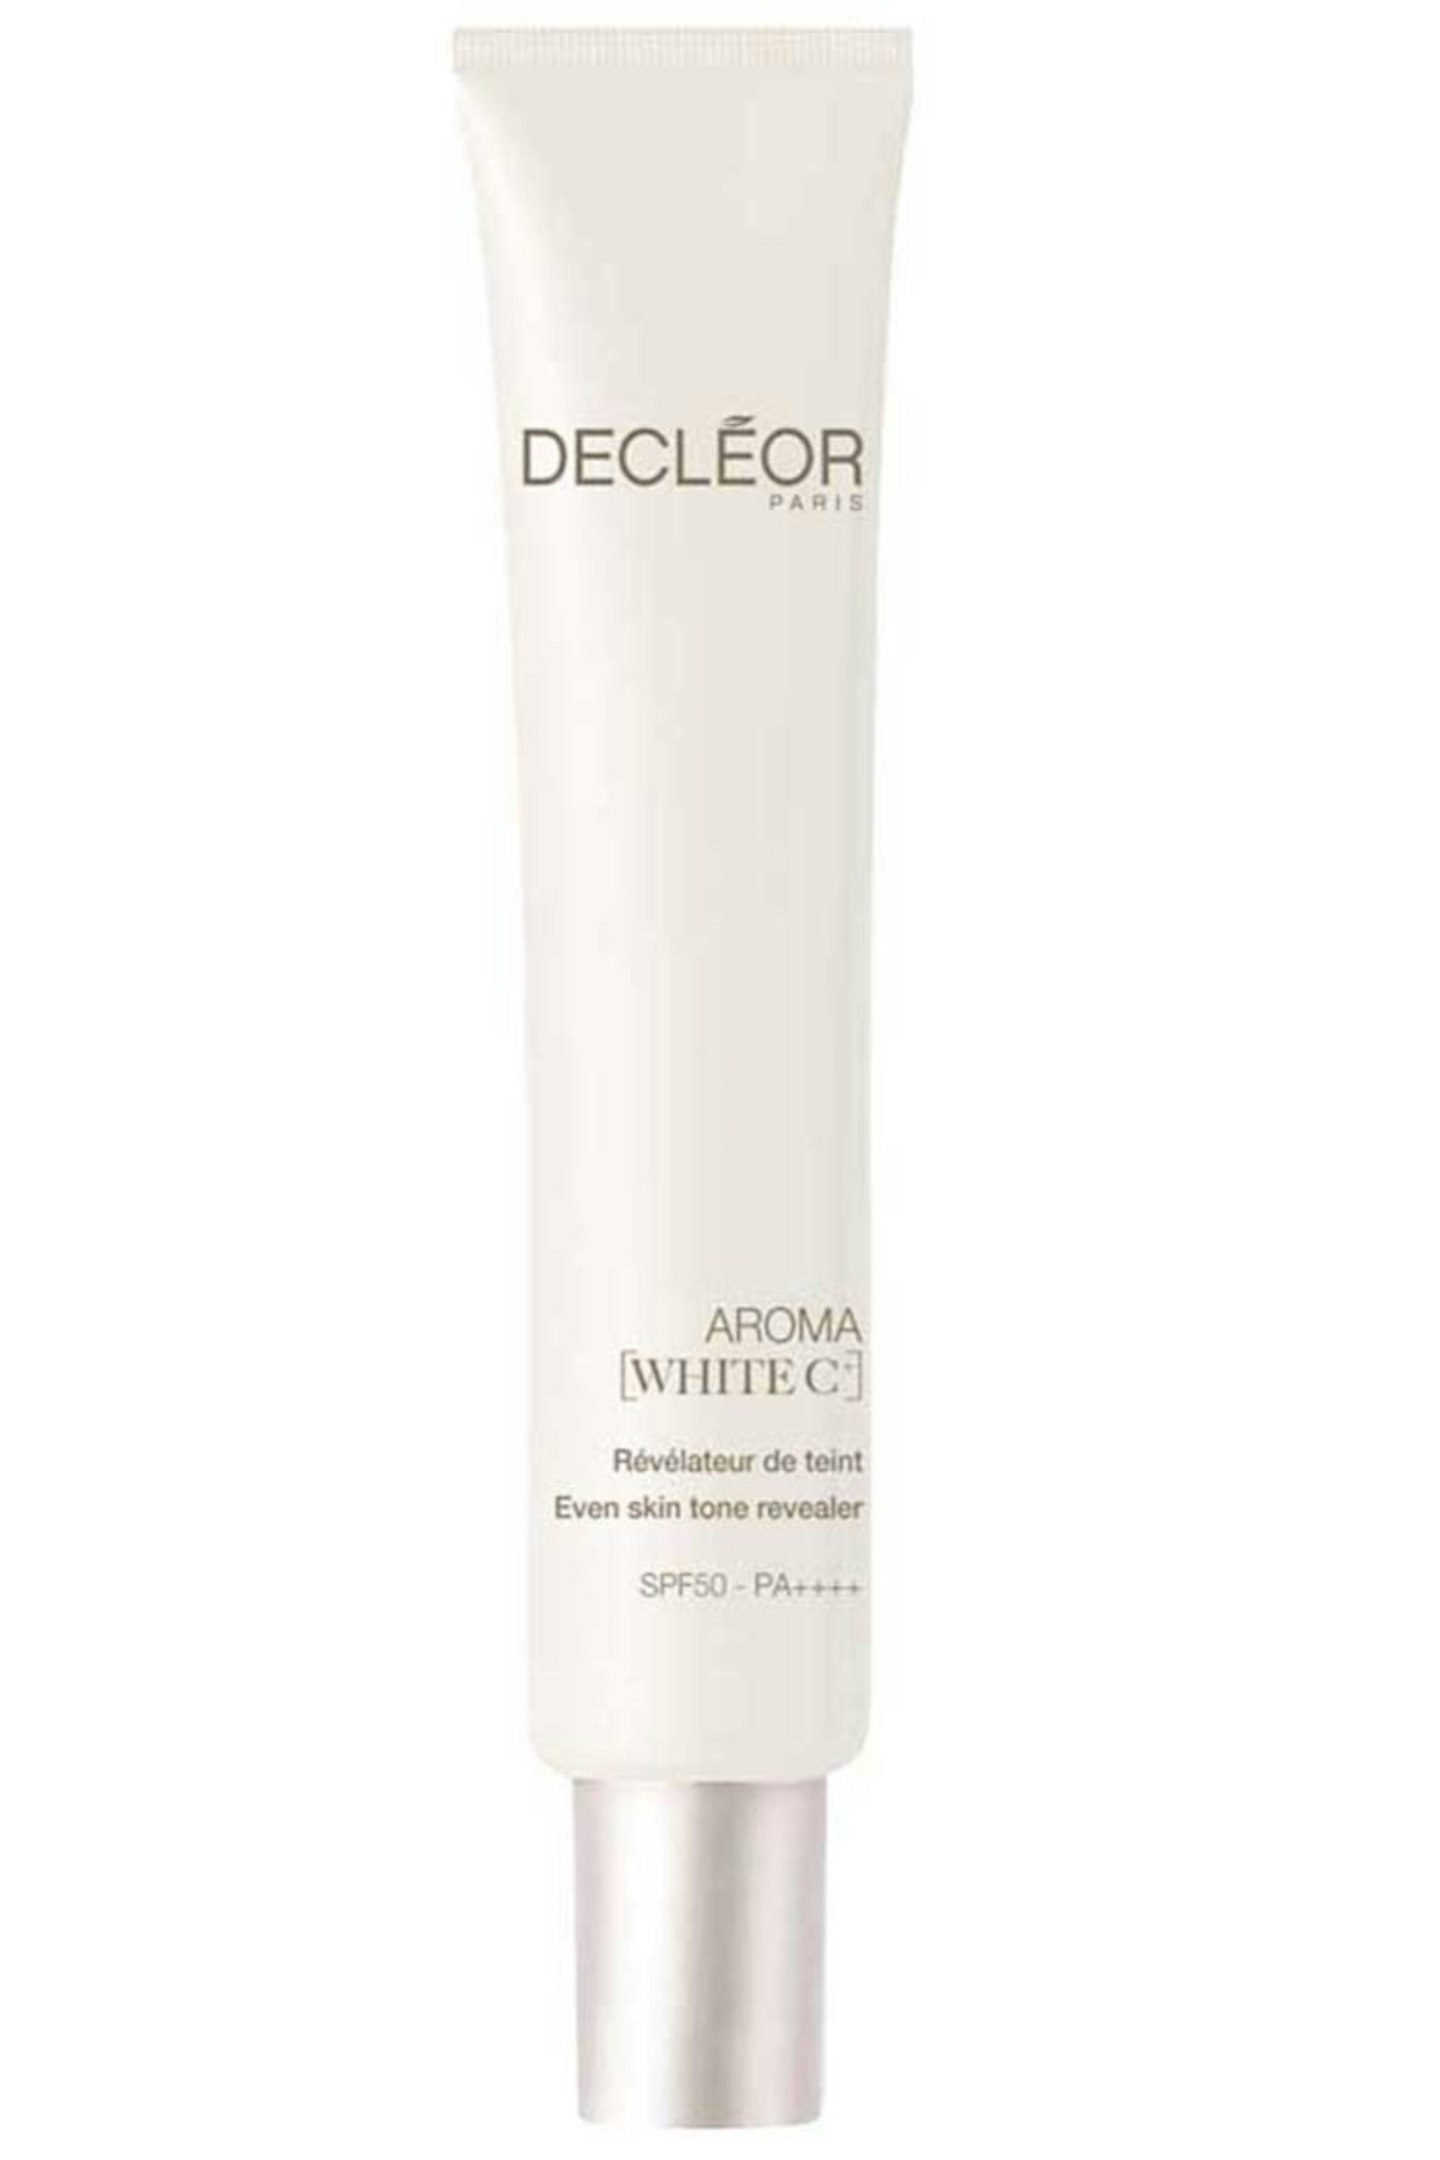 Decleor Aroma White C+ Even Skin Tone Revealer, £34.00, www.decleor.co.uk